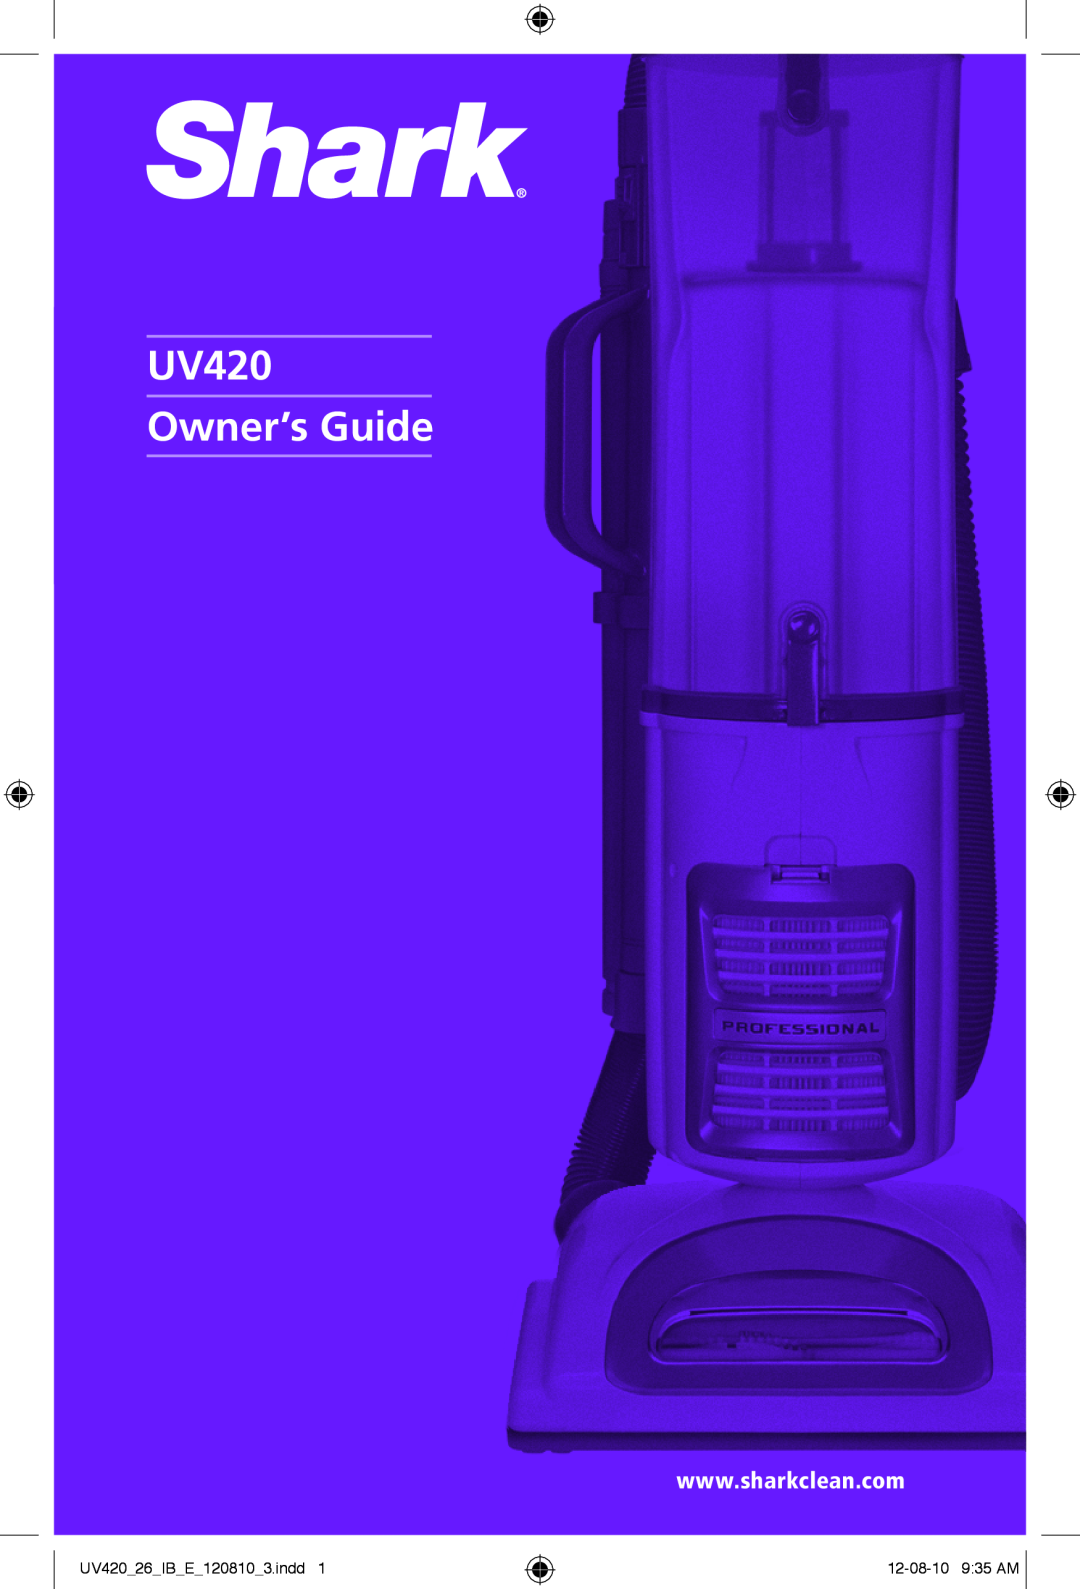 Shark manual UV420 Owner’s Guide, UV42026IBE1208103.indd, 12-08-10 935 AM 